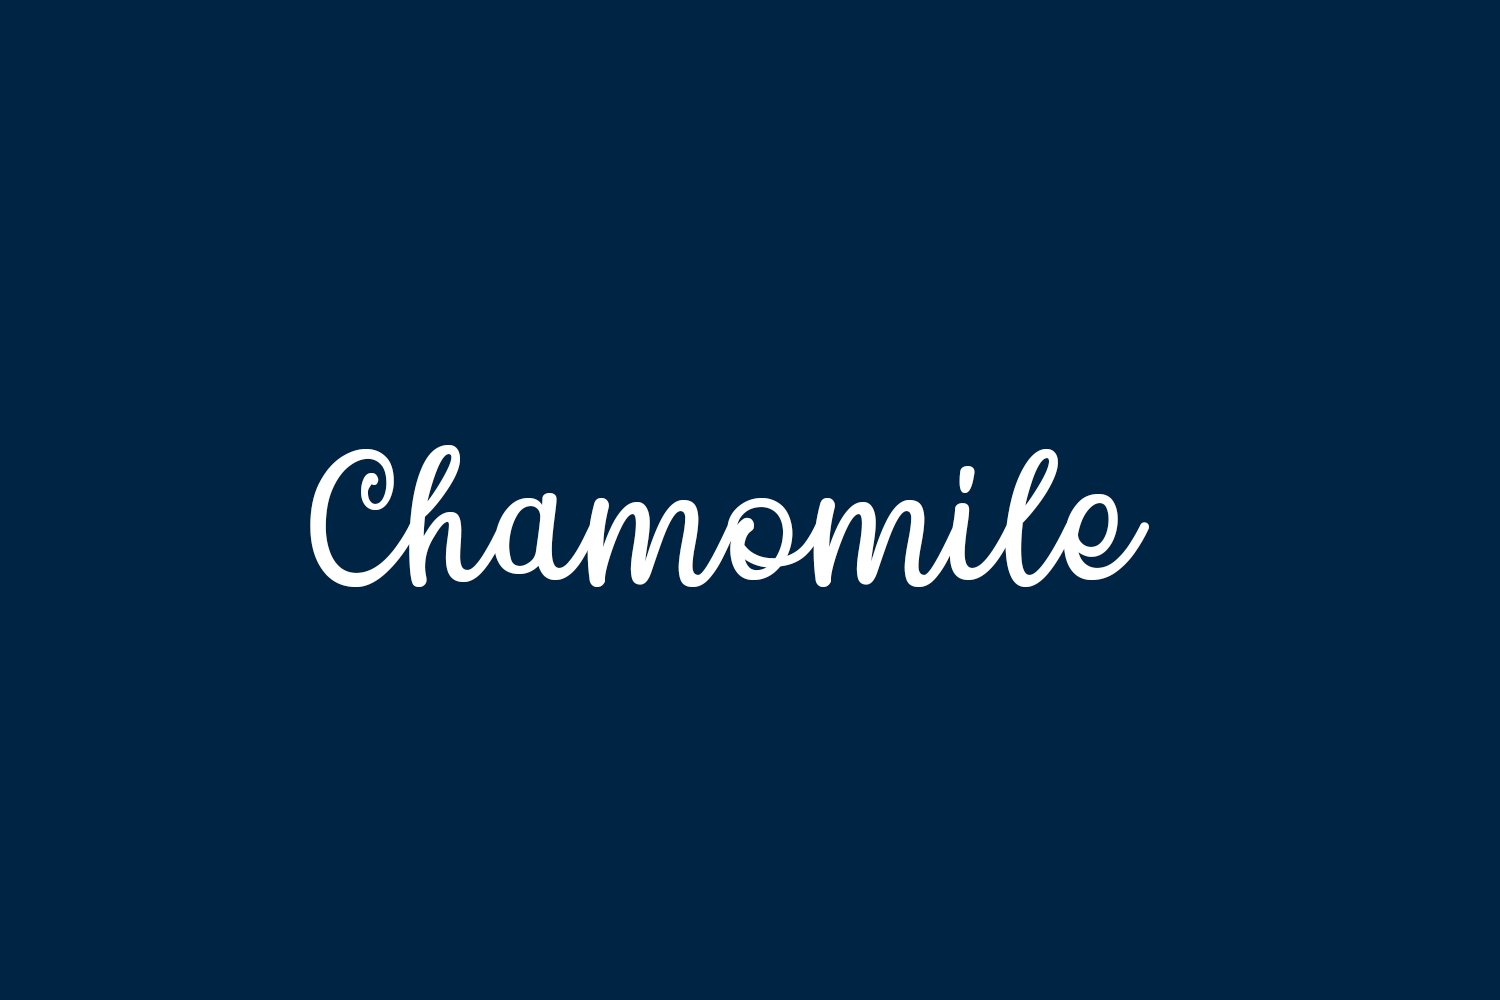 Chamomile Free Font